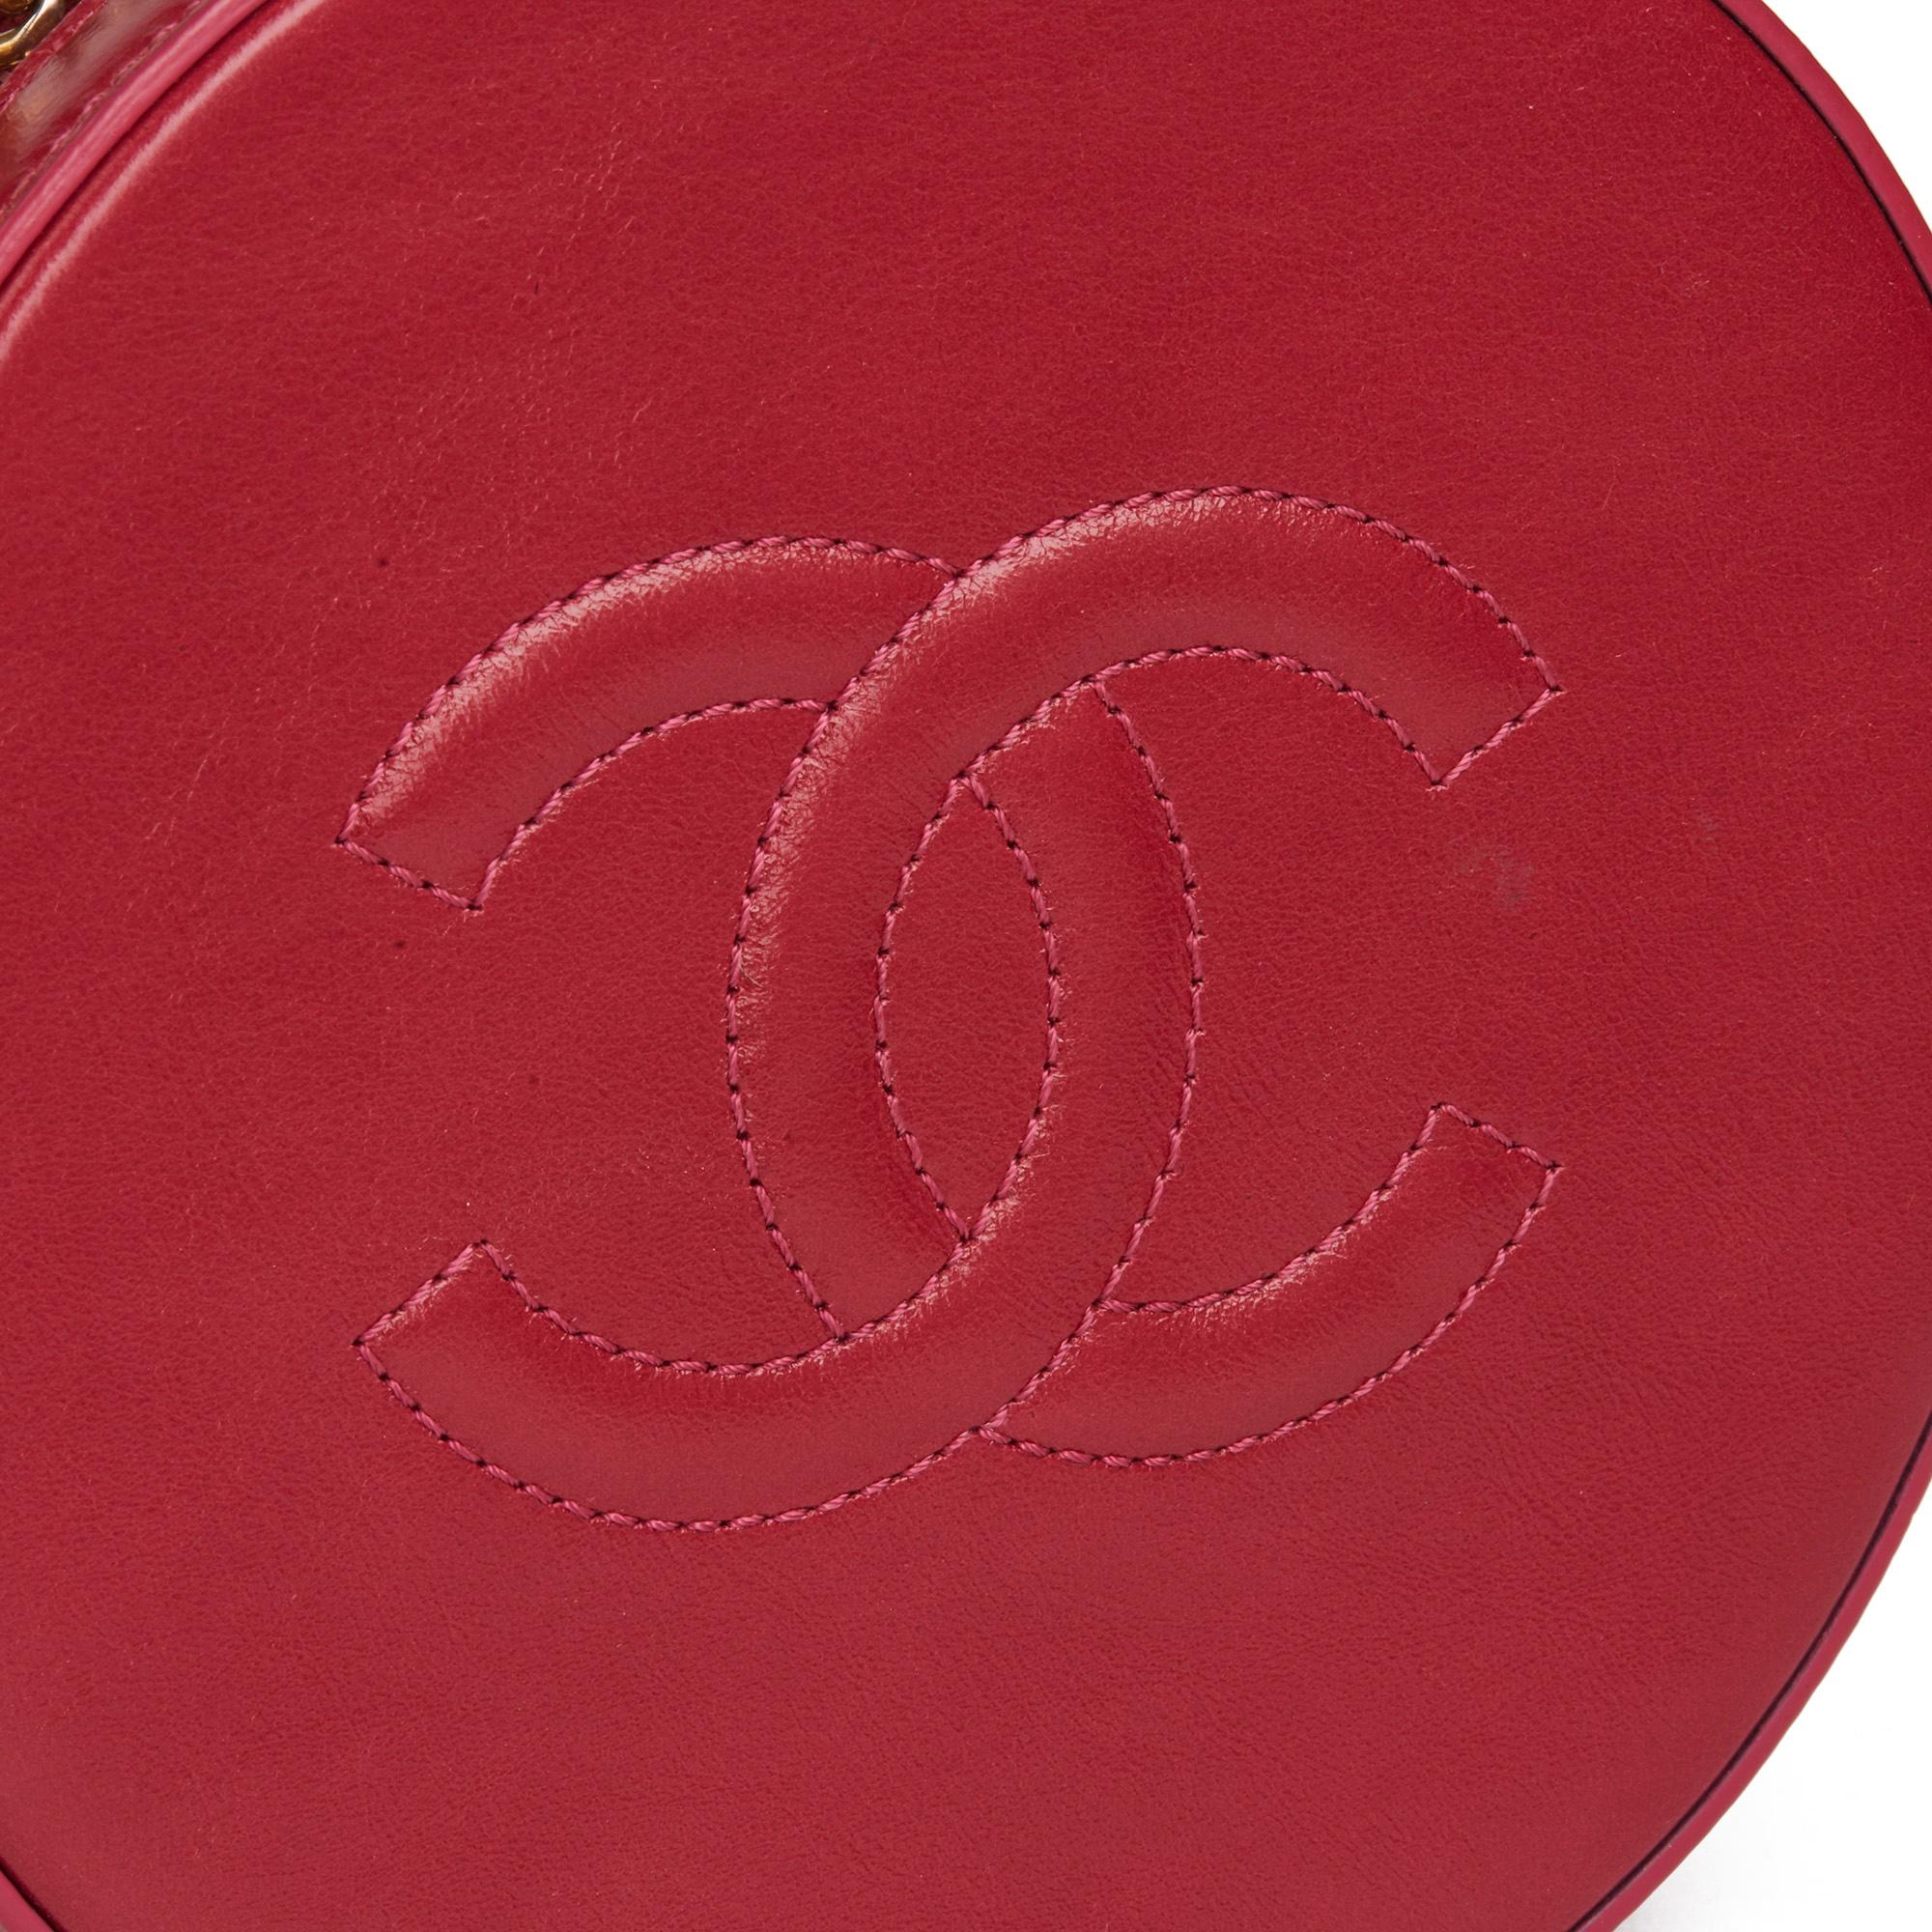 2018 Chanel Raspberry Glazed Calfskin Leather Round as Earth Bag  4